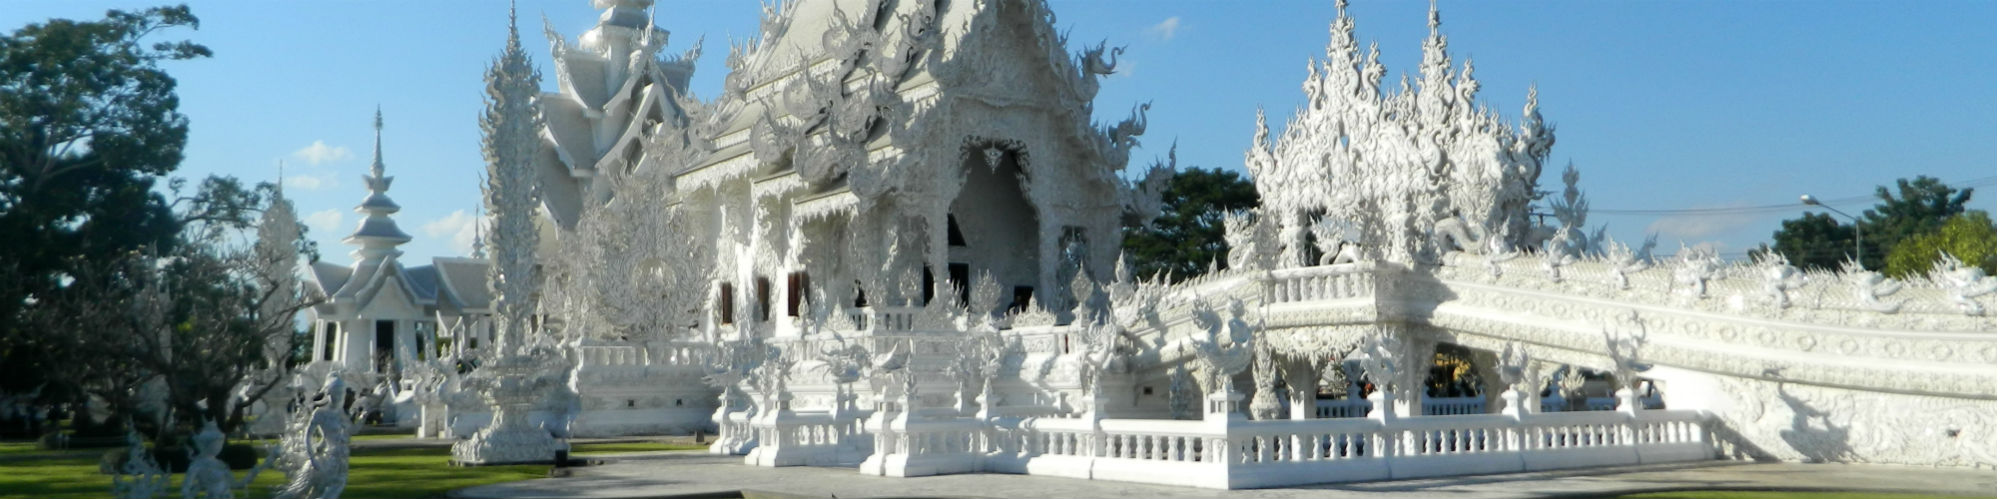 Wat Rong Khun (White Temple), near Chaing Rai